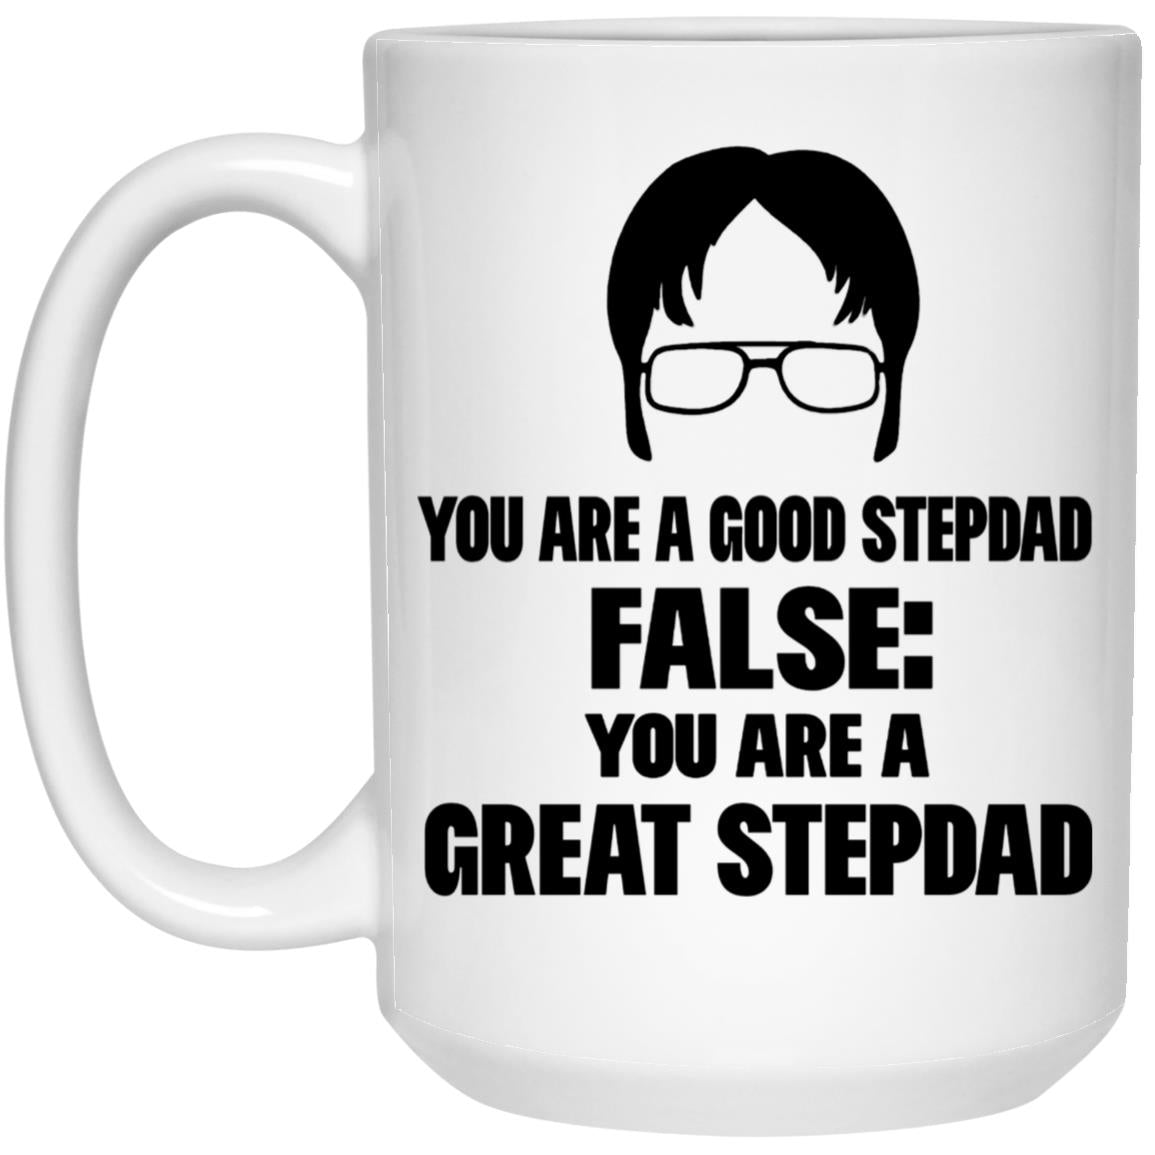 Great Stepdad Mug Dwight